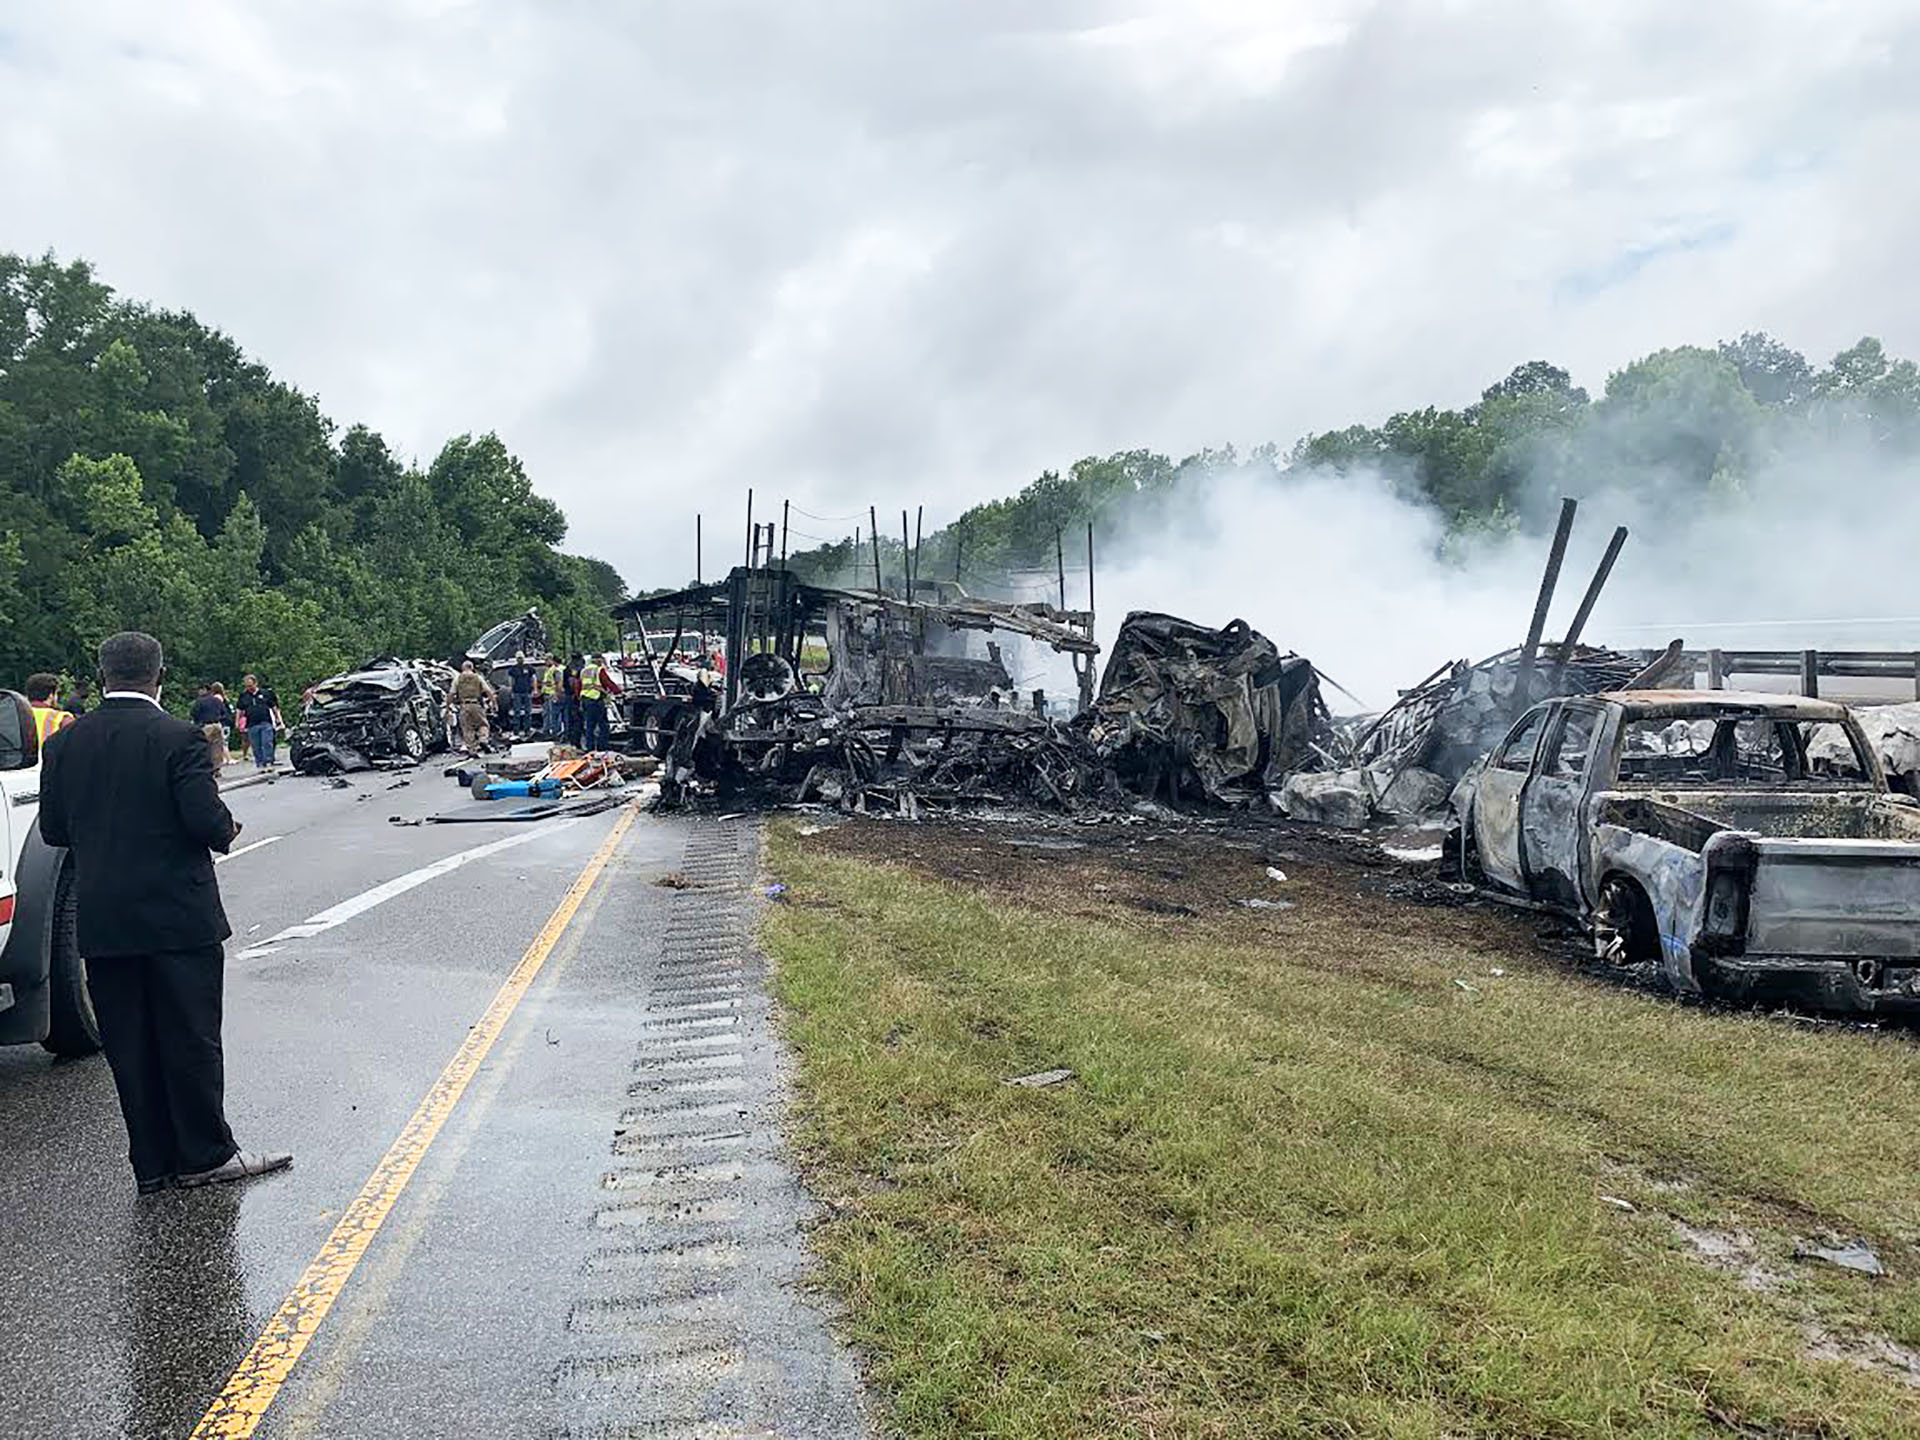 Witness describes aftermath of Alabama crash that left 9 children and 1  adult dead